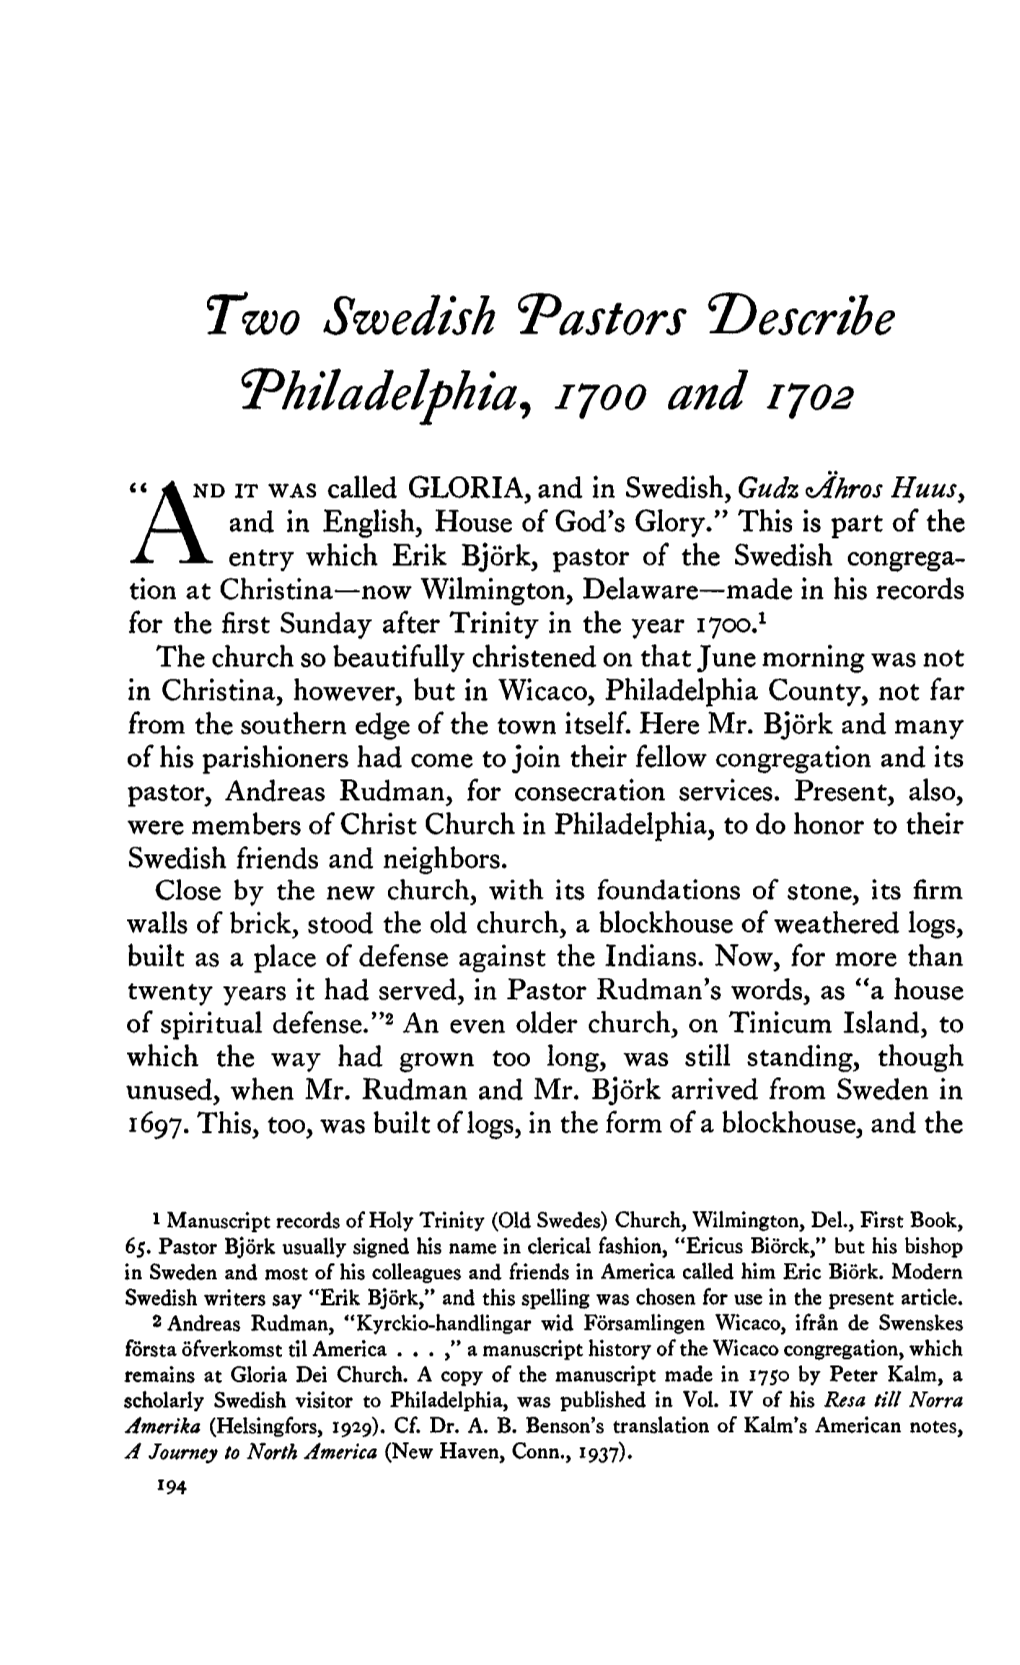 Two Swedish 'Pastors T)Escribe Philadelphia, 1700 and 1702